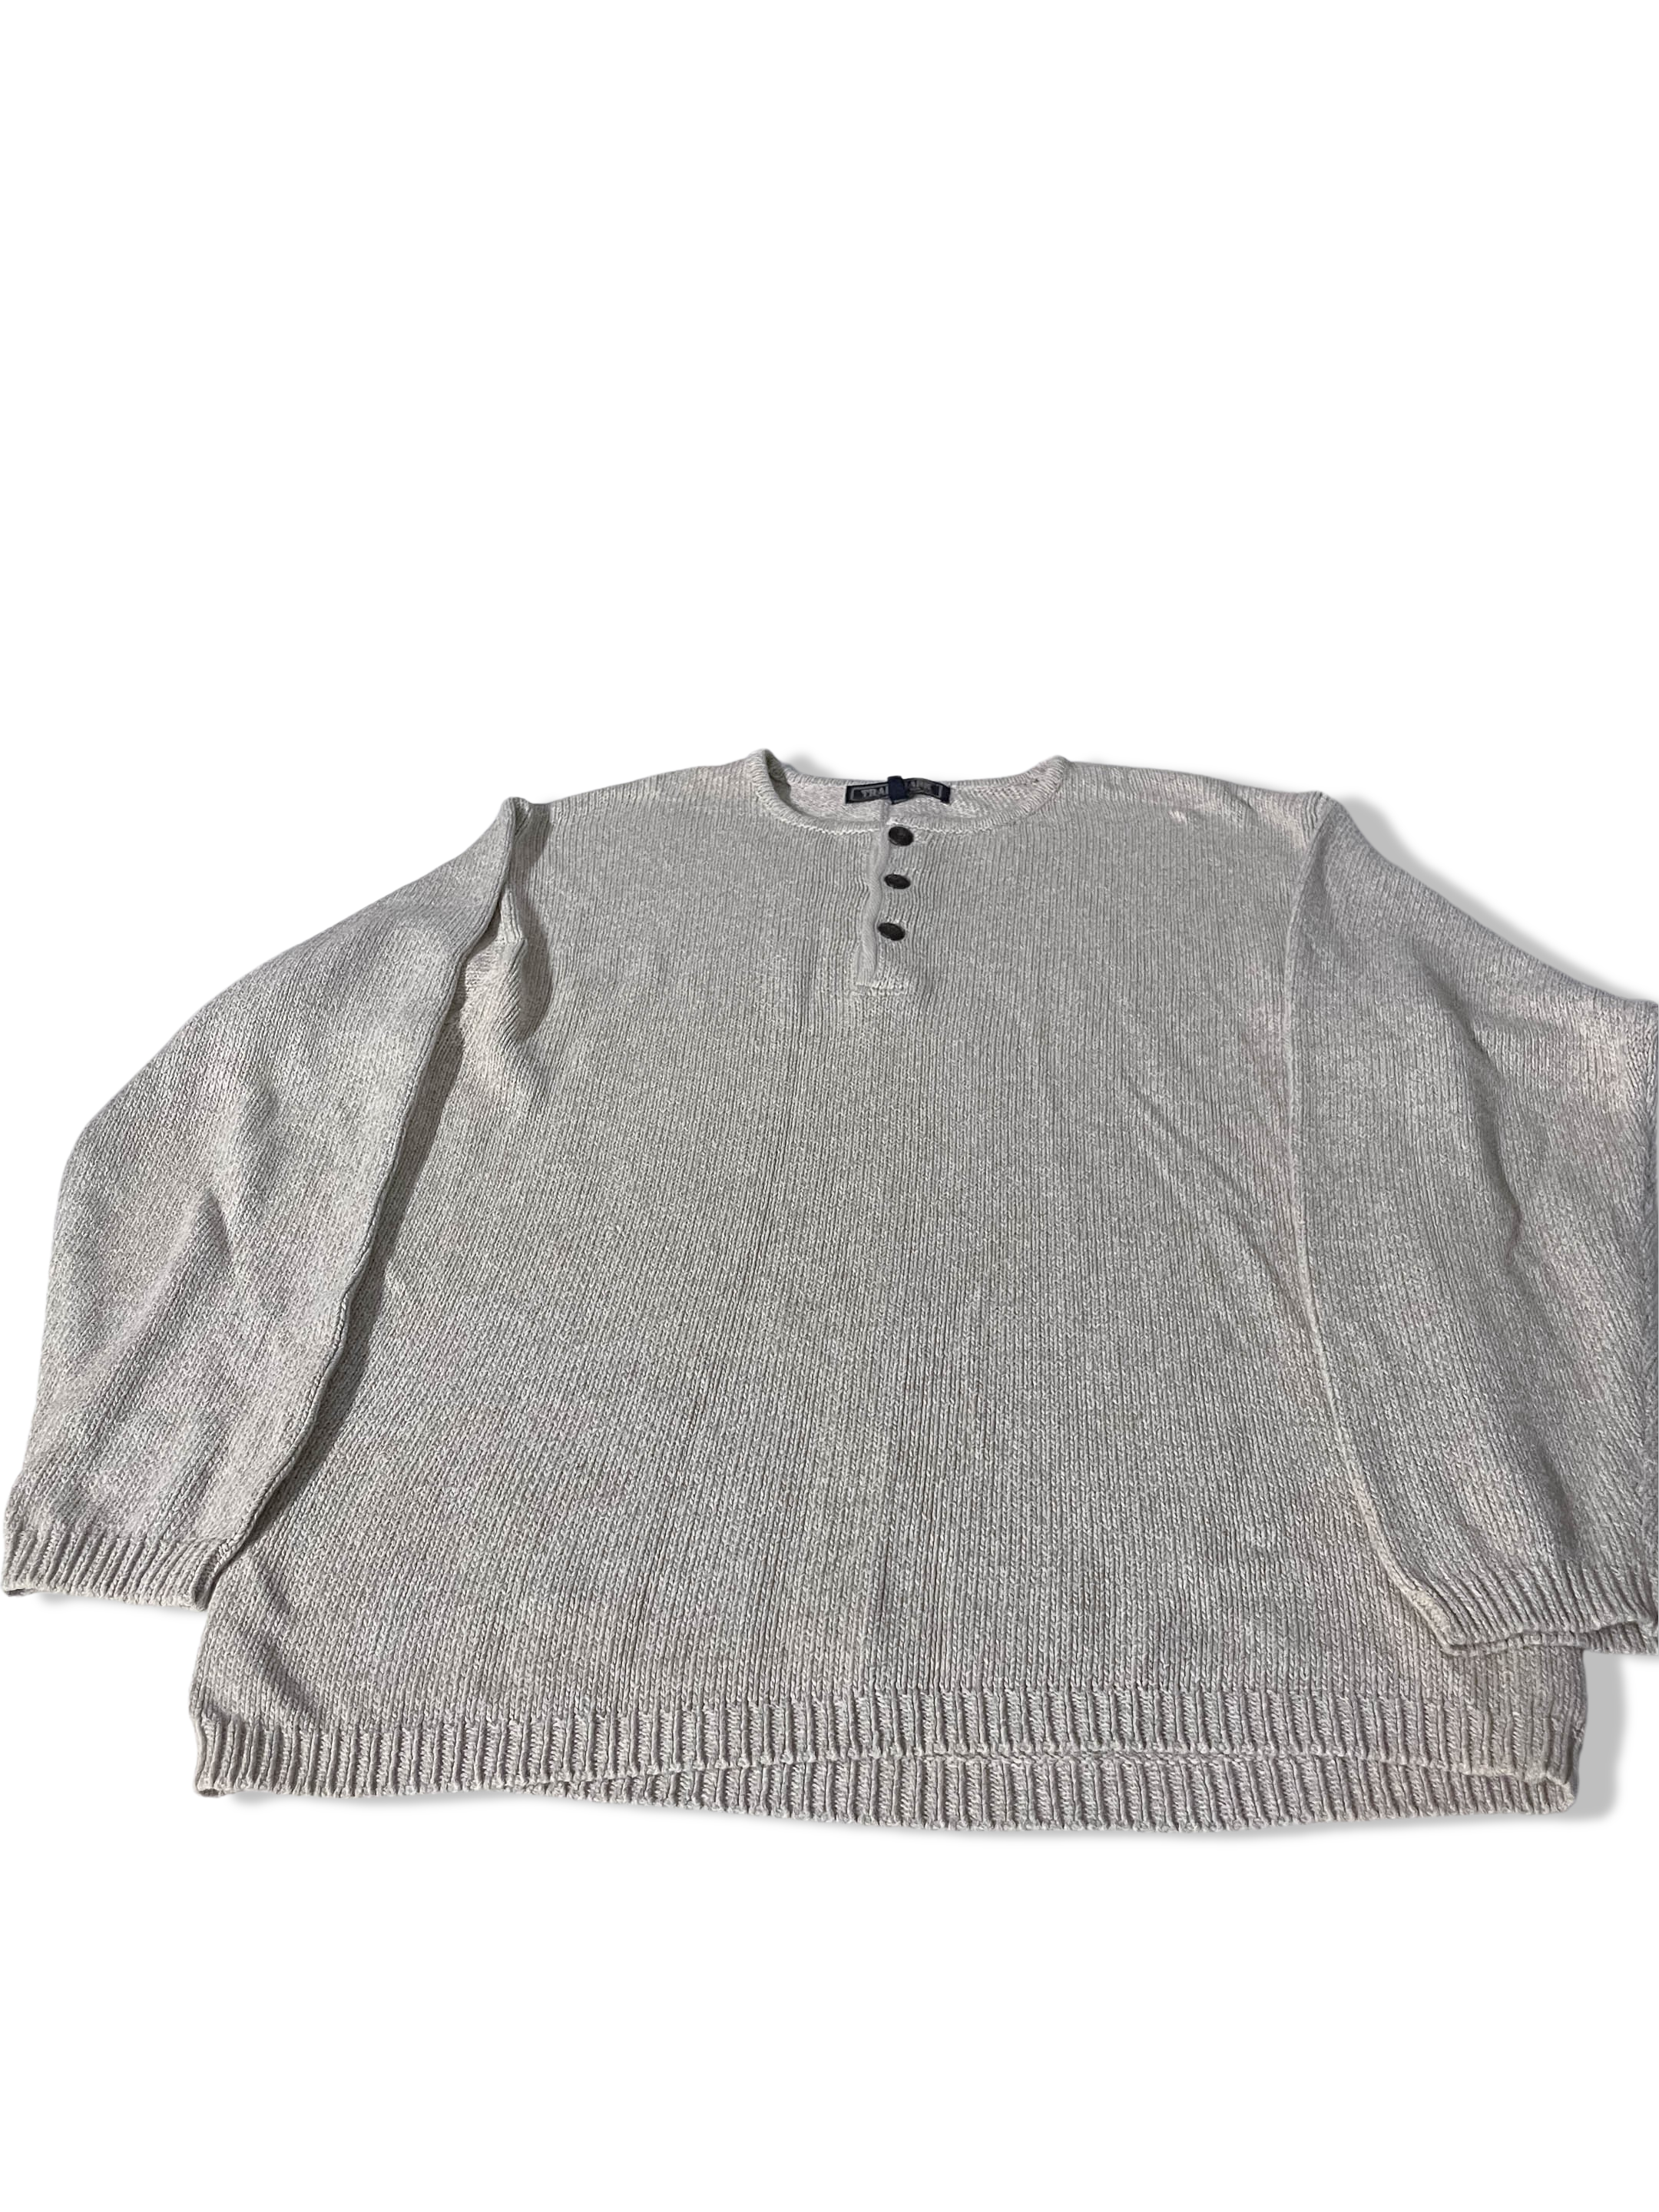 Vintage St Bernard Trademark 1/4 button up mens thick cotton small cream sweater 